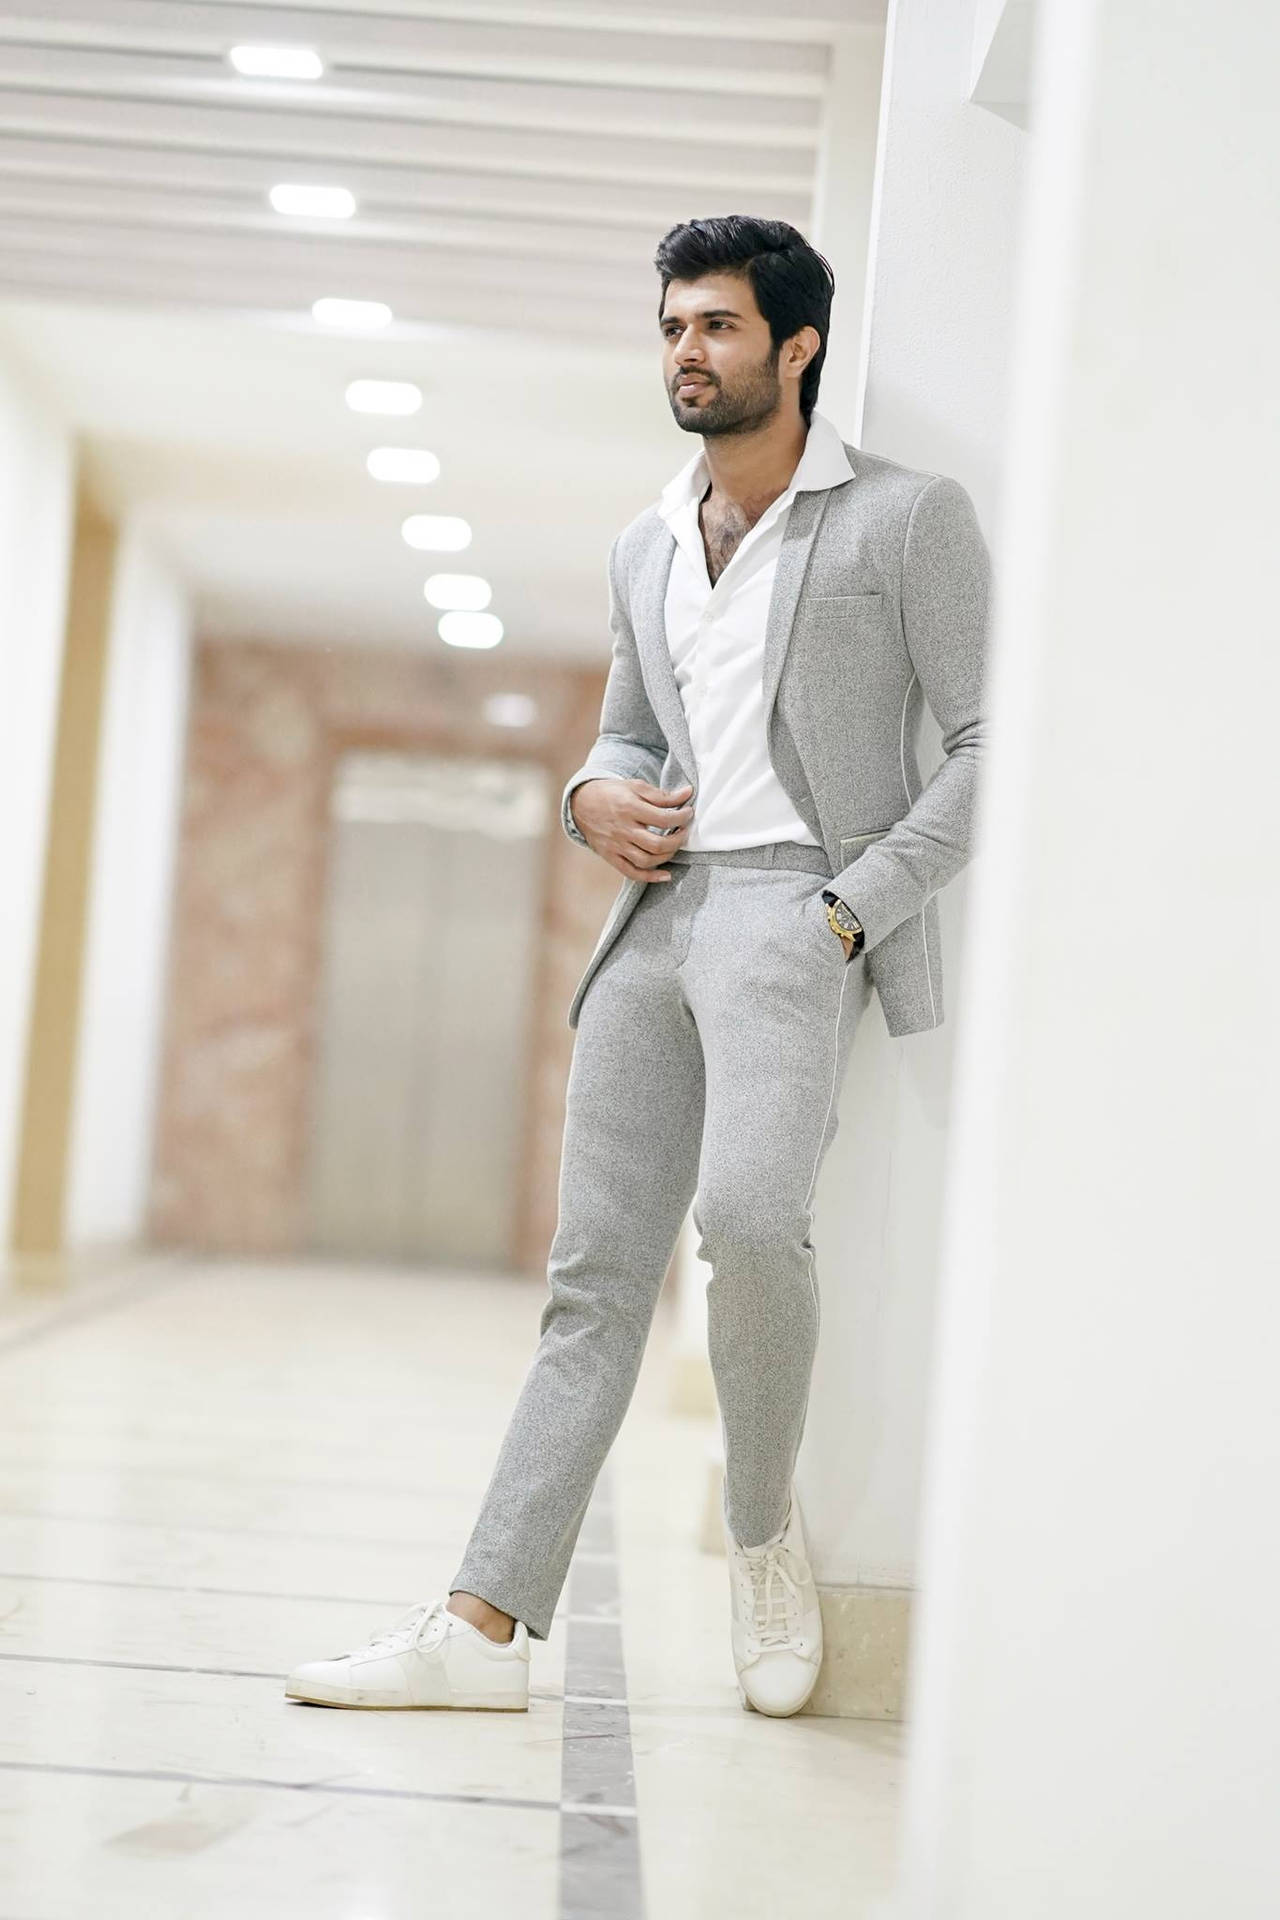 Vijay Deverakonda Gray Suit 4k